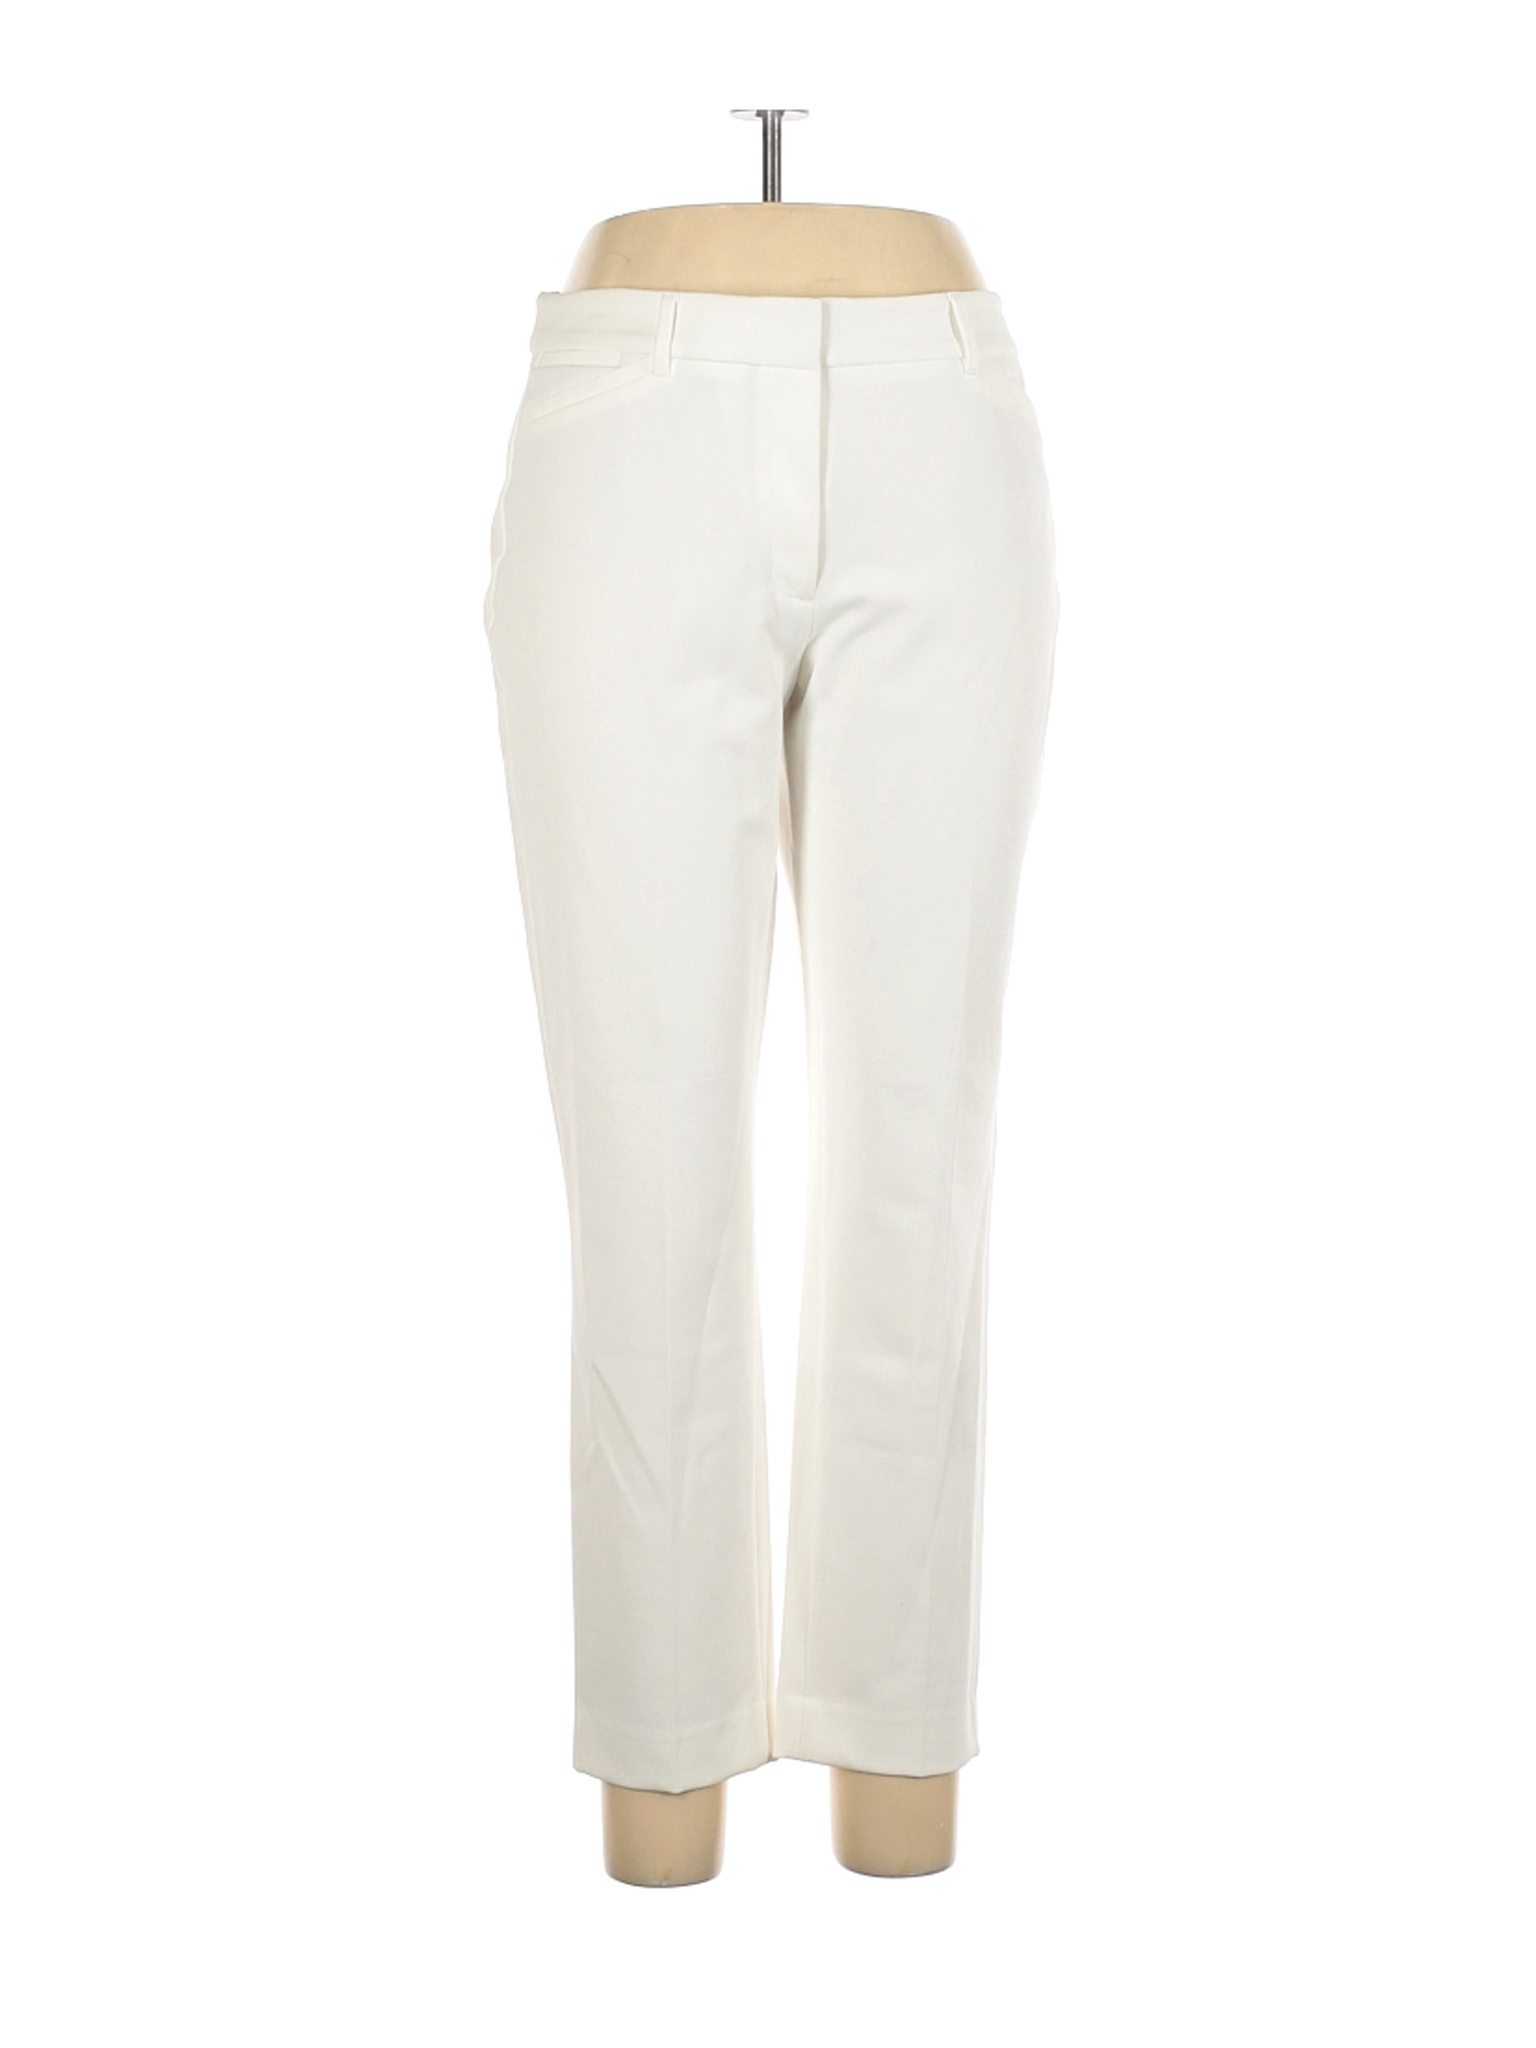 White House Black Market Women White Dress Pants 10 | eBay